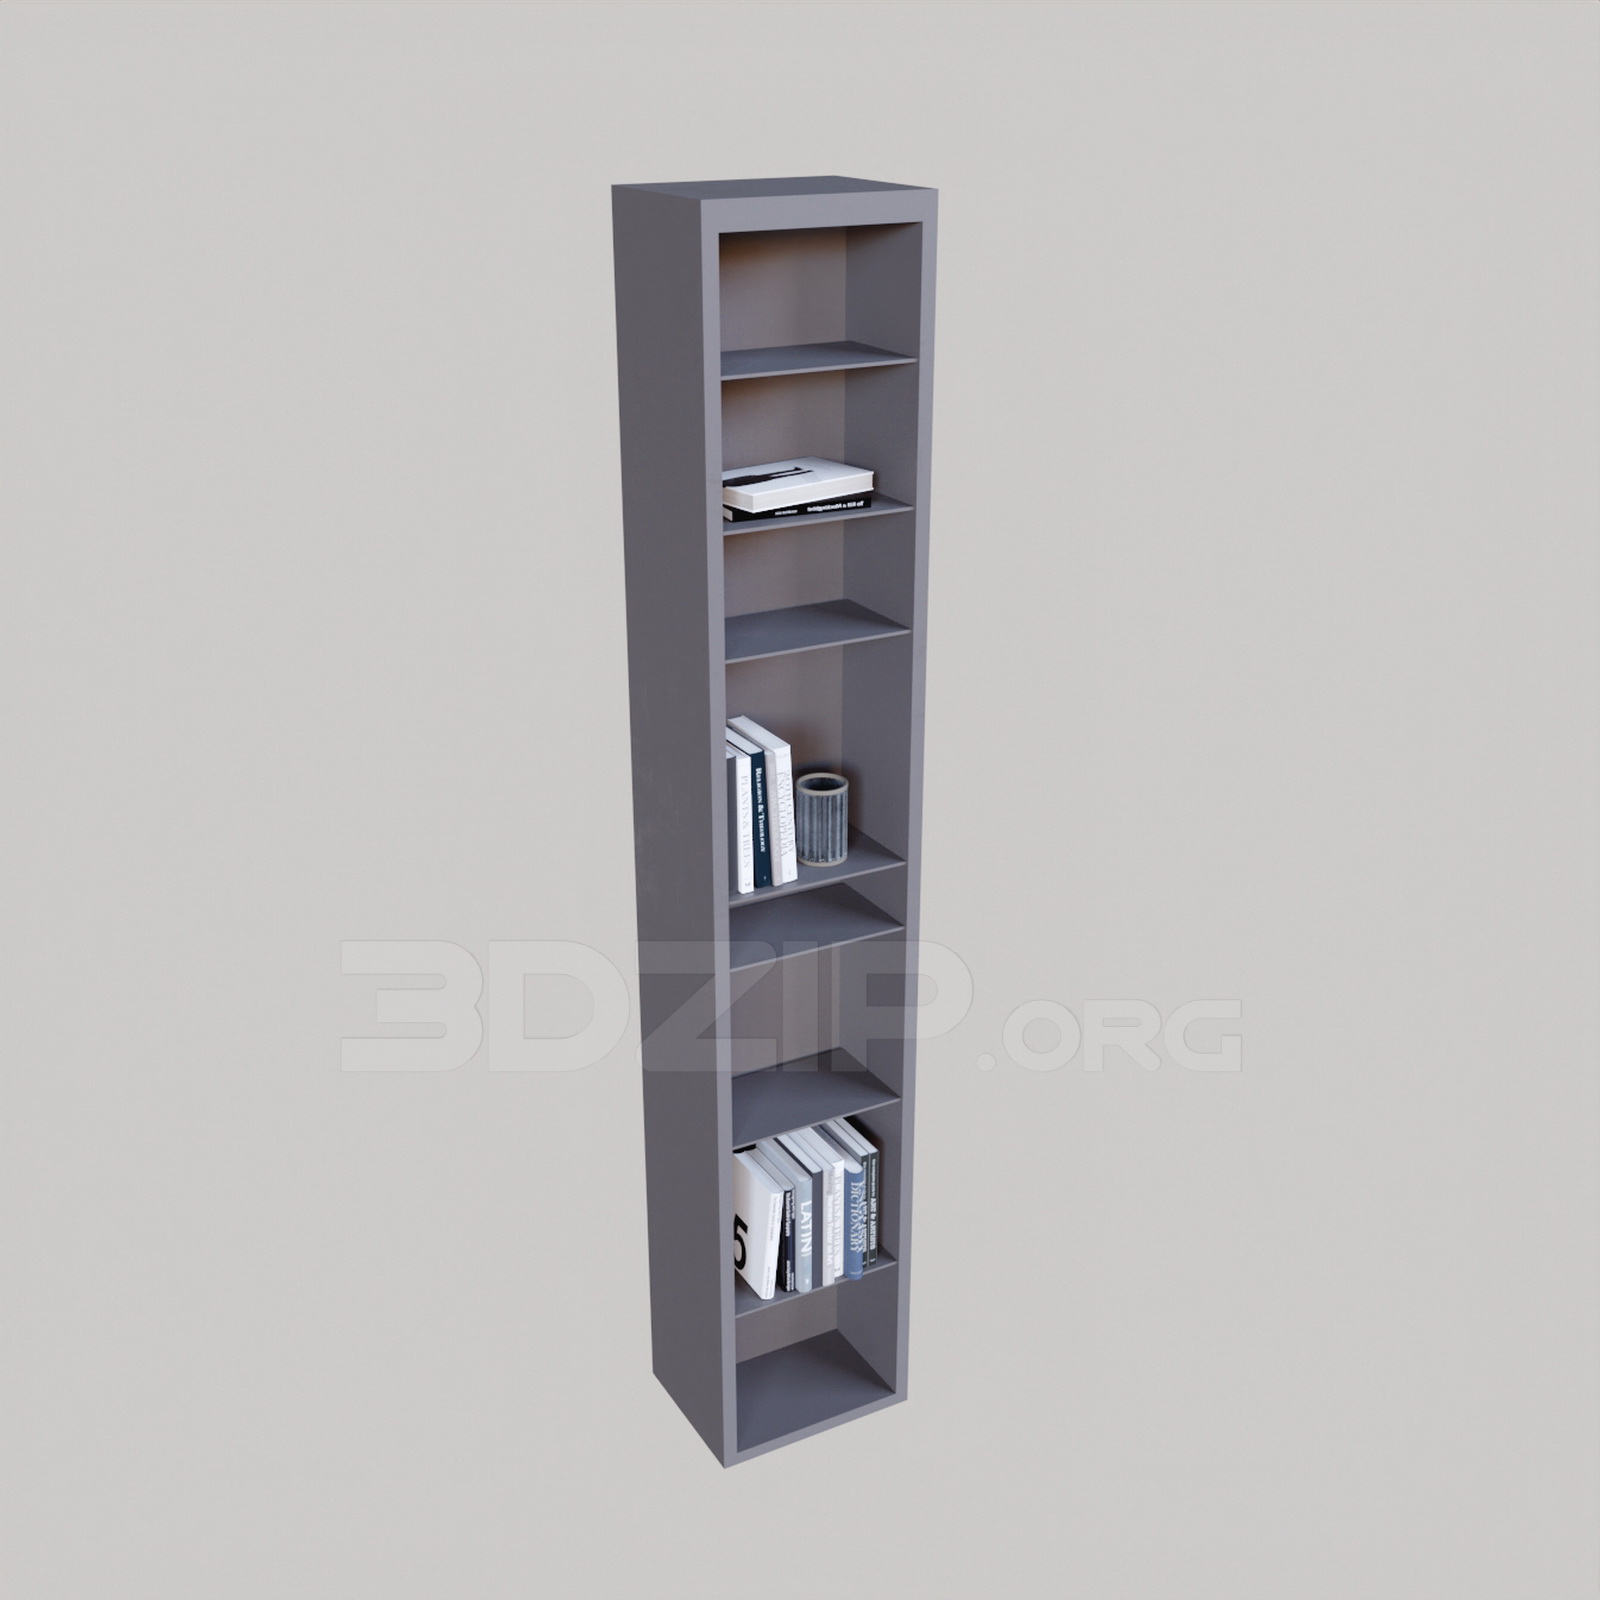 10951. Download Free Bookcase Model By Kha Vi